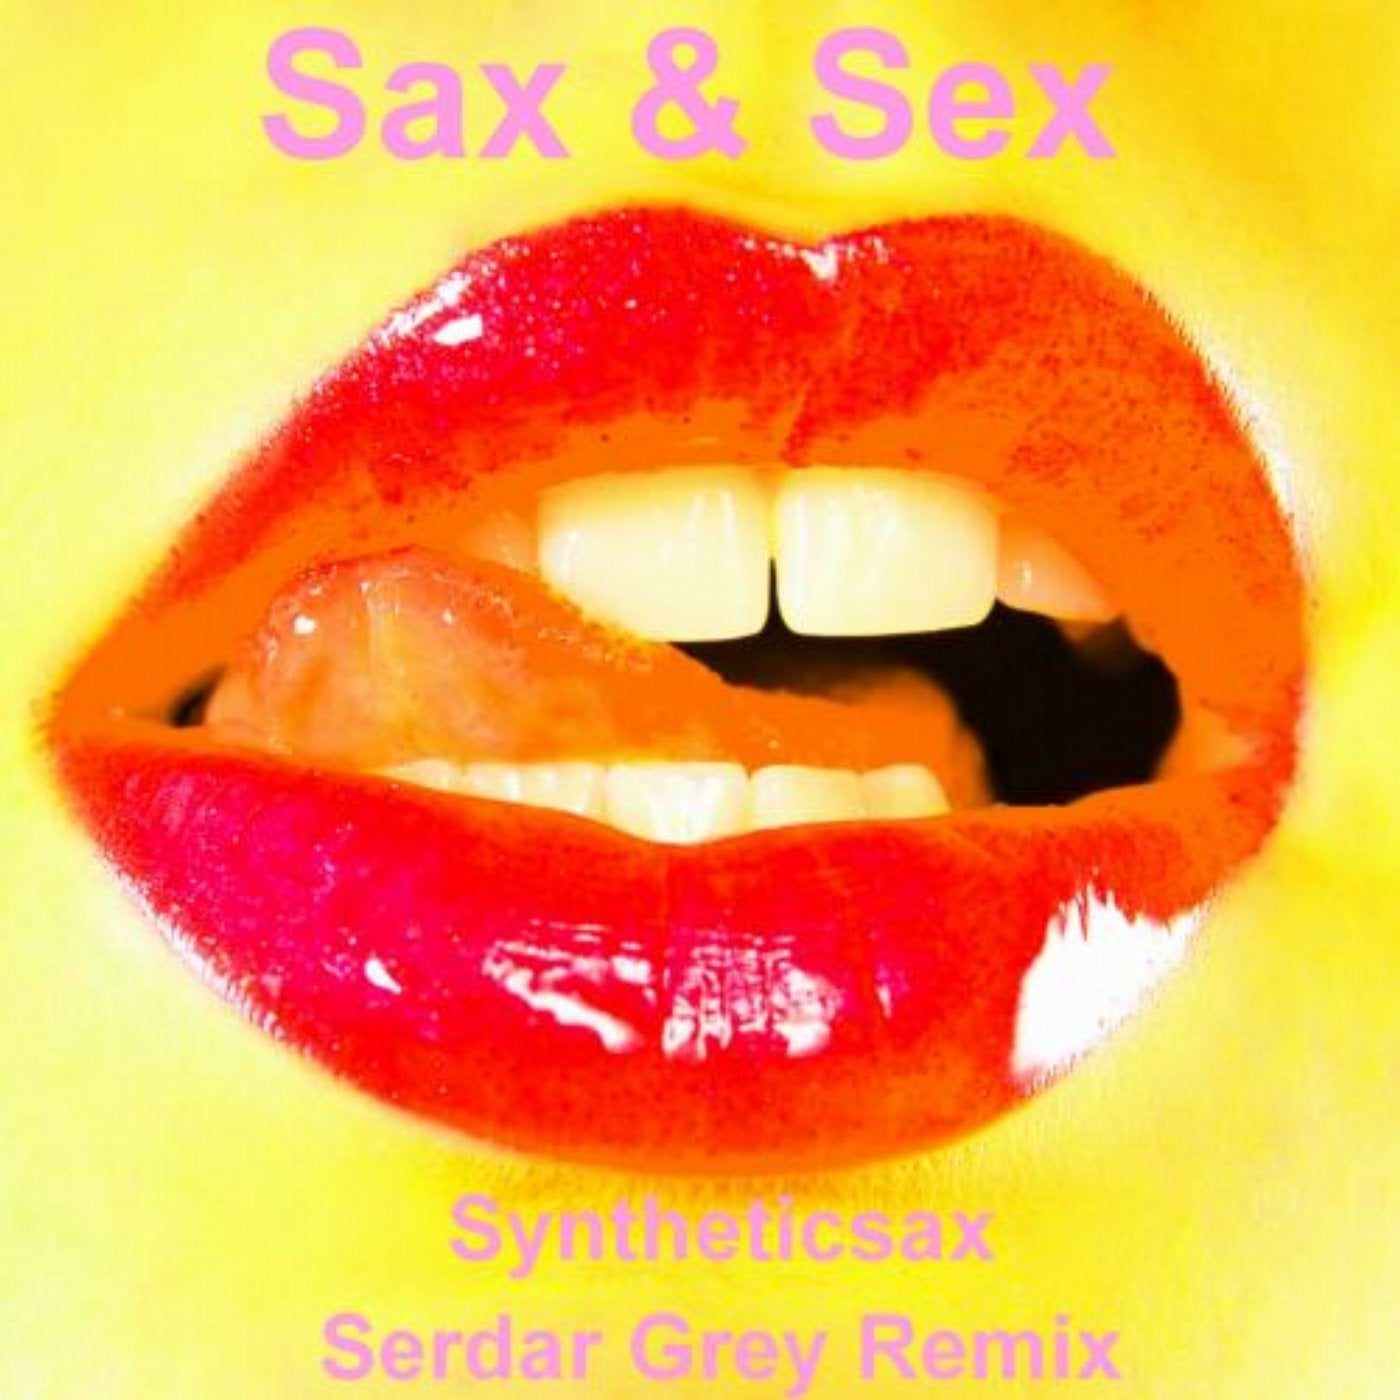 Sax & Sex (Serdar Grey Remix)